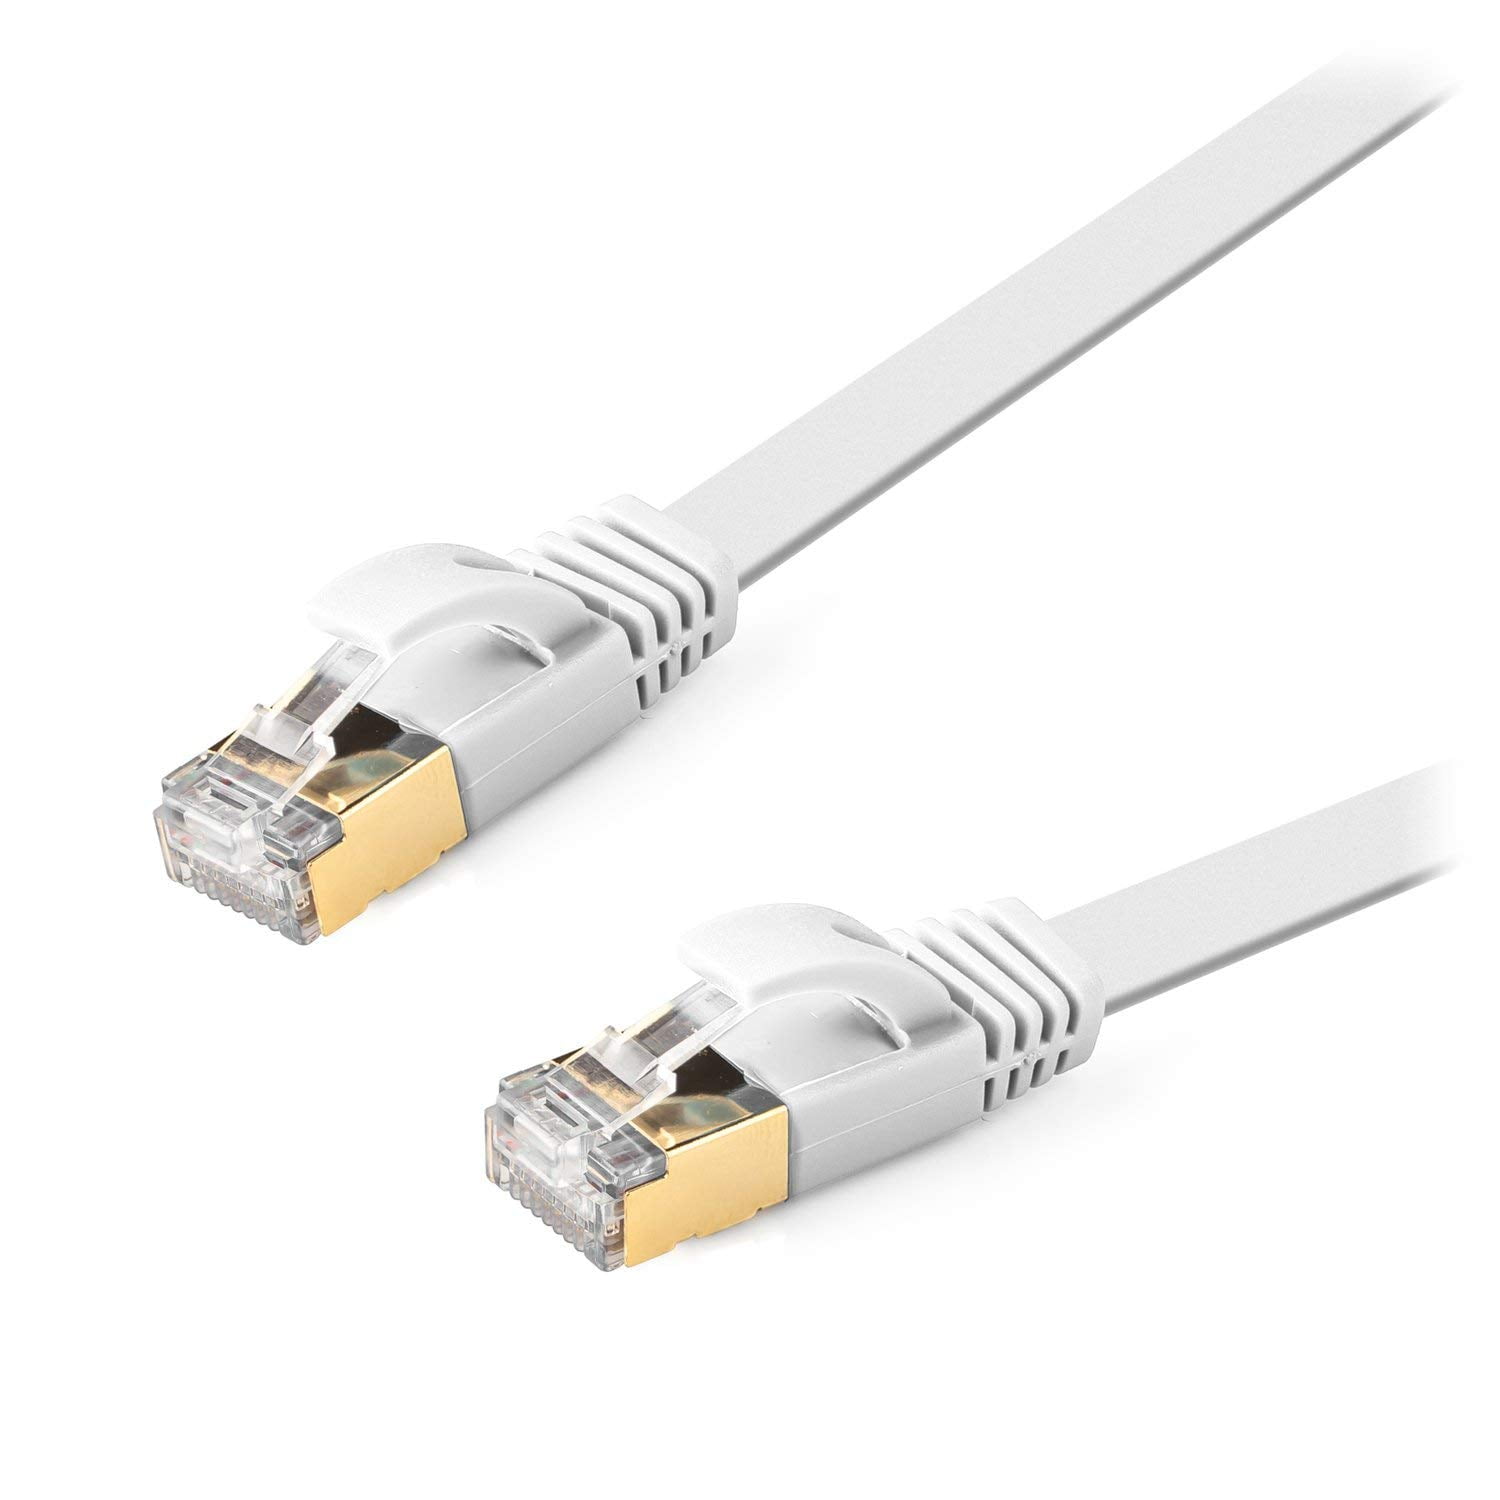 Hama red 5m-cable cat5e STP LAN-cable Patch-cable CAT 5e Gigabit Ethernet 